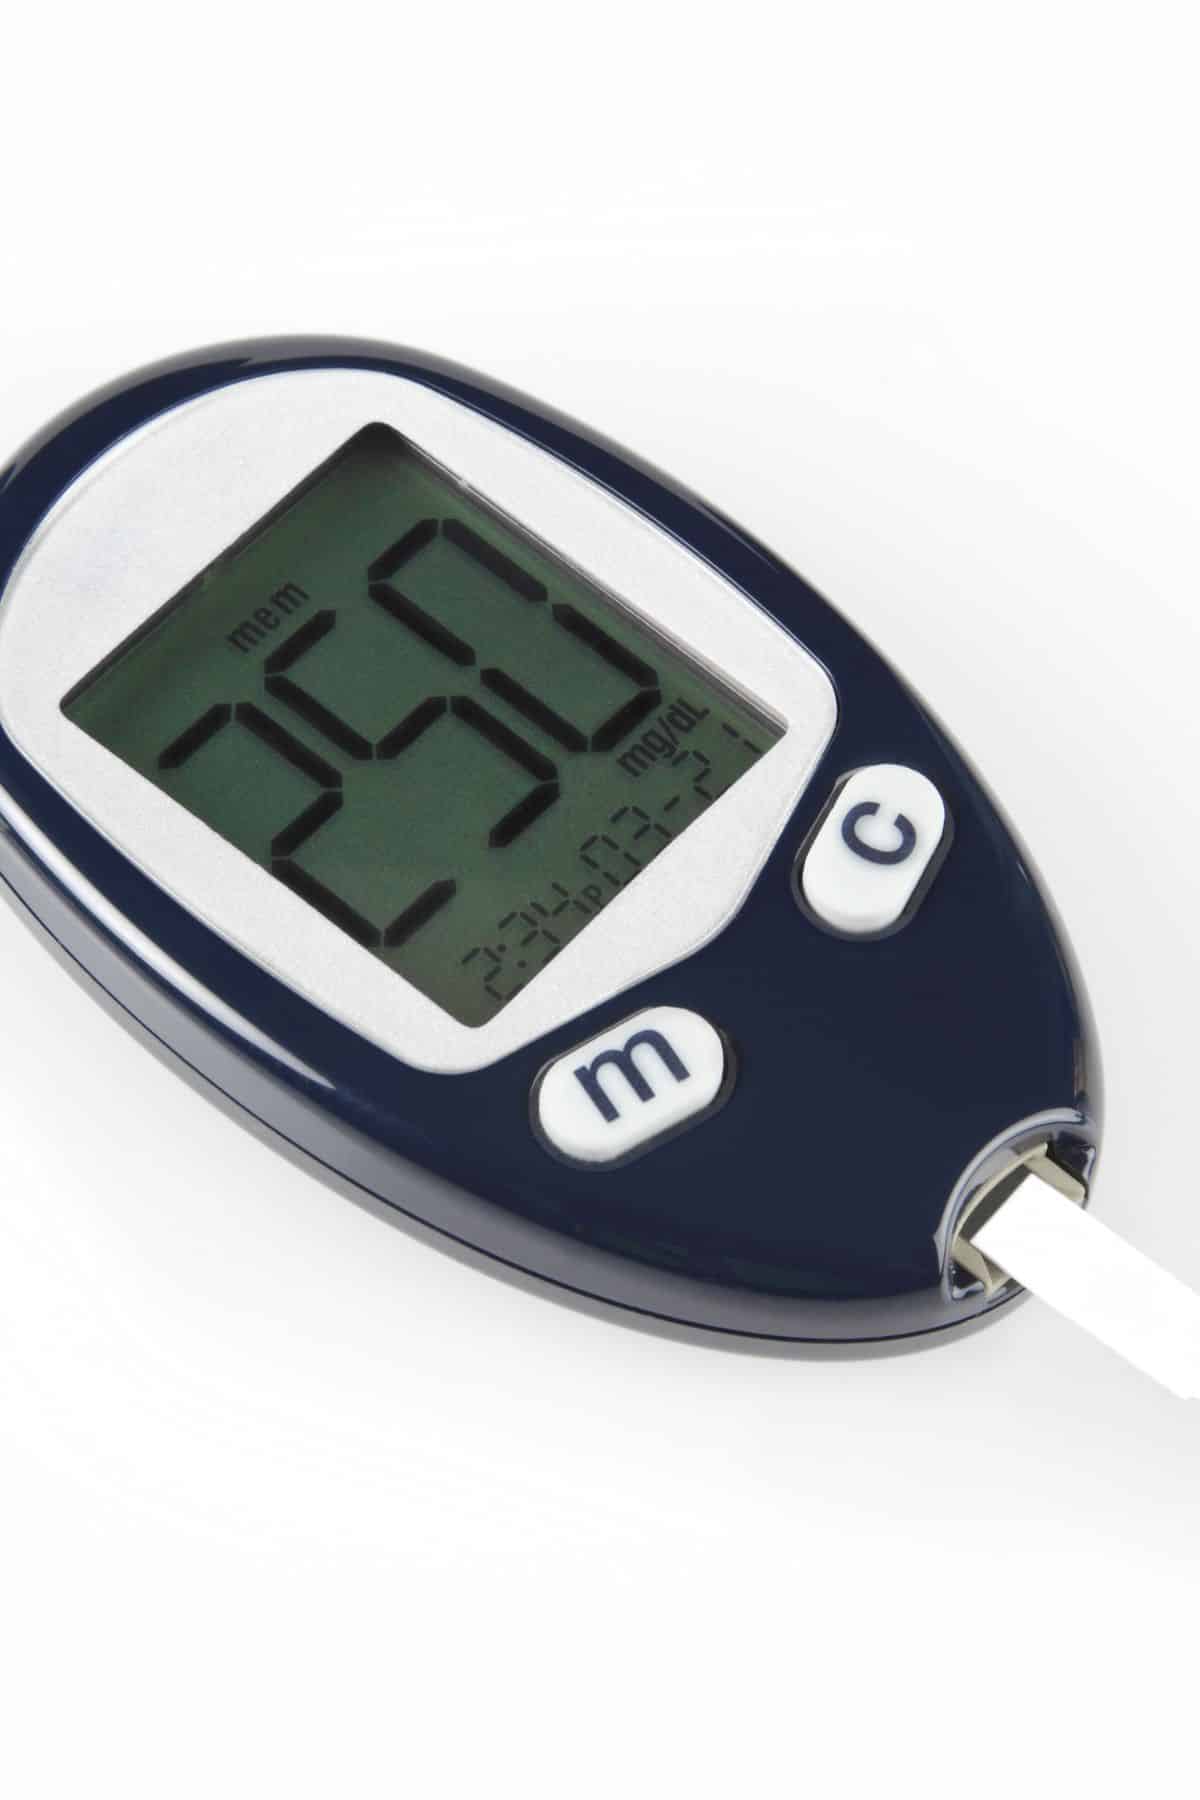 a blood sugar meter reading high blood sugar.